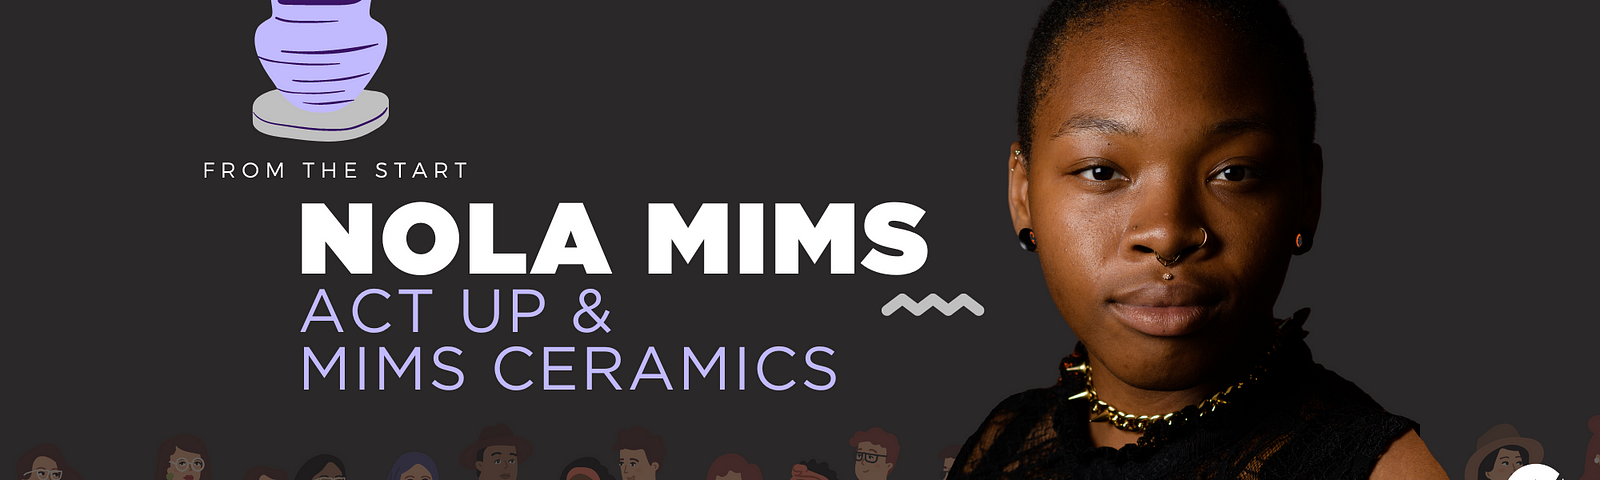 FROM THE START: Nola Mims — Act Up & Mims Ceramics